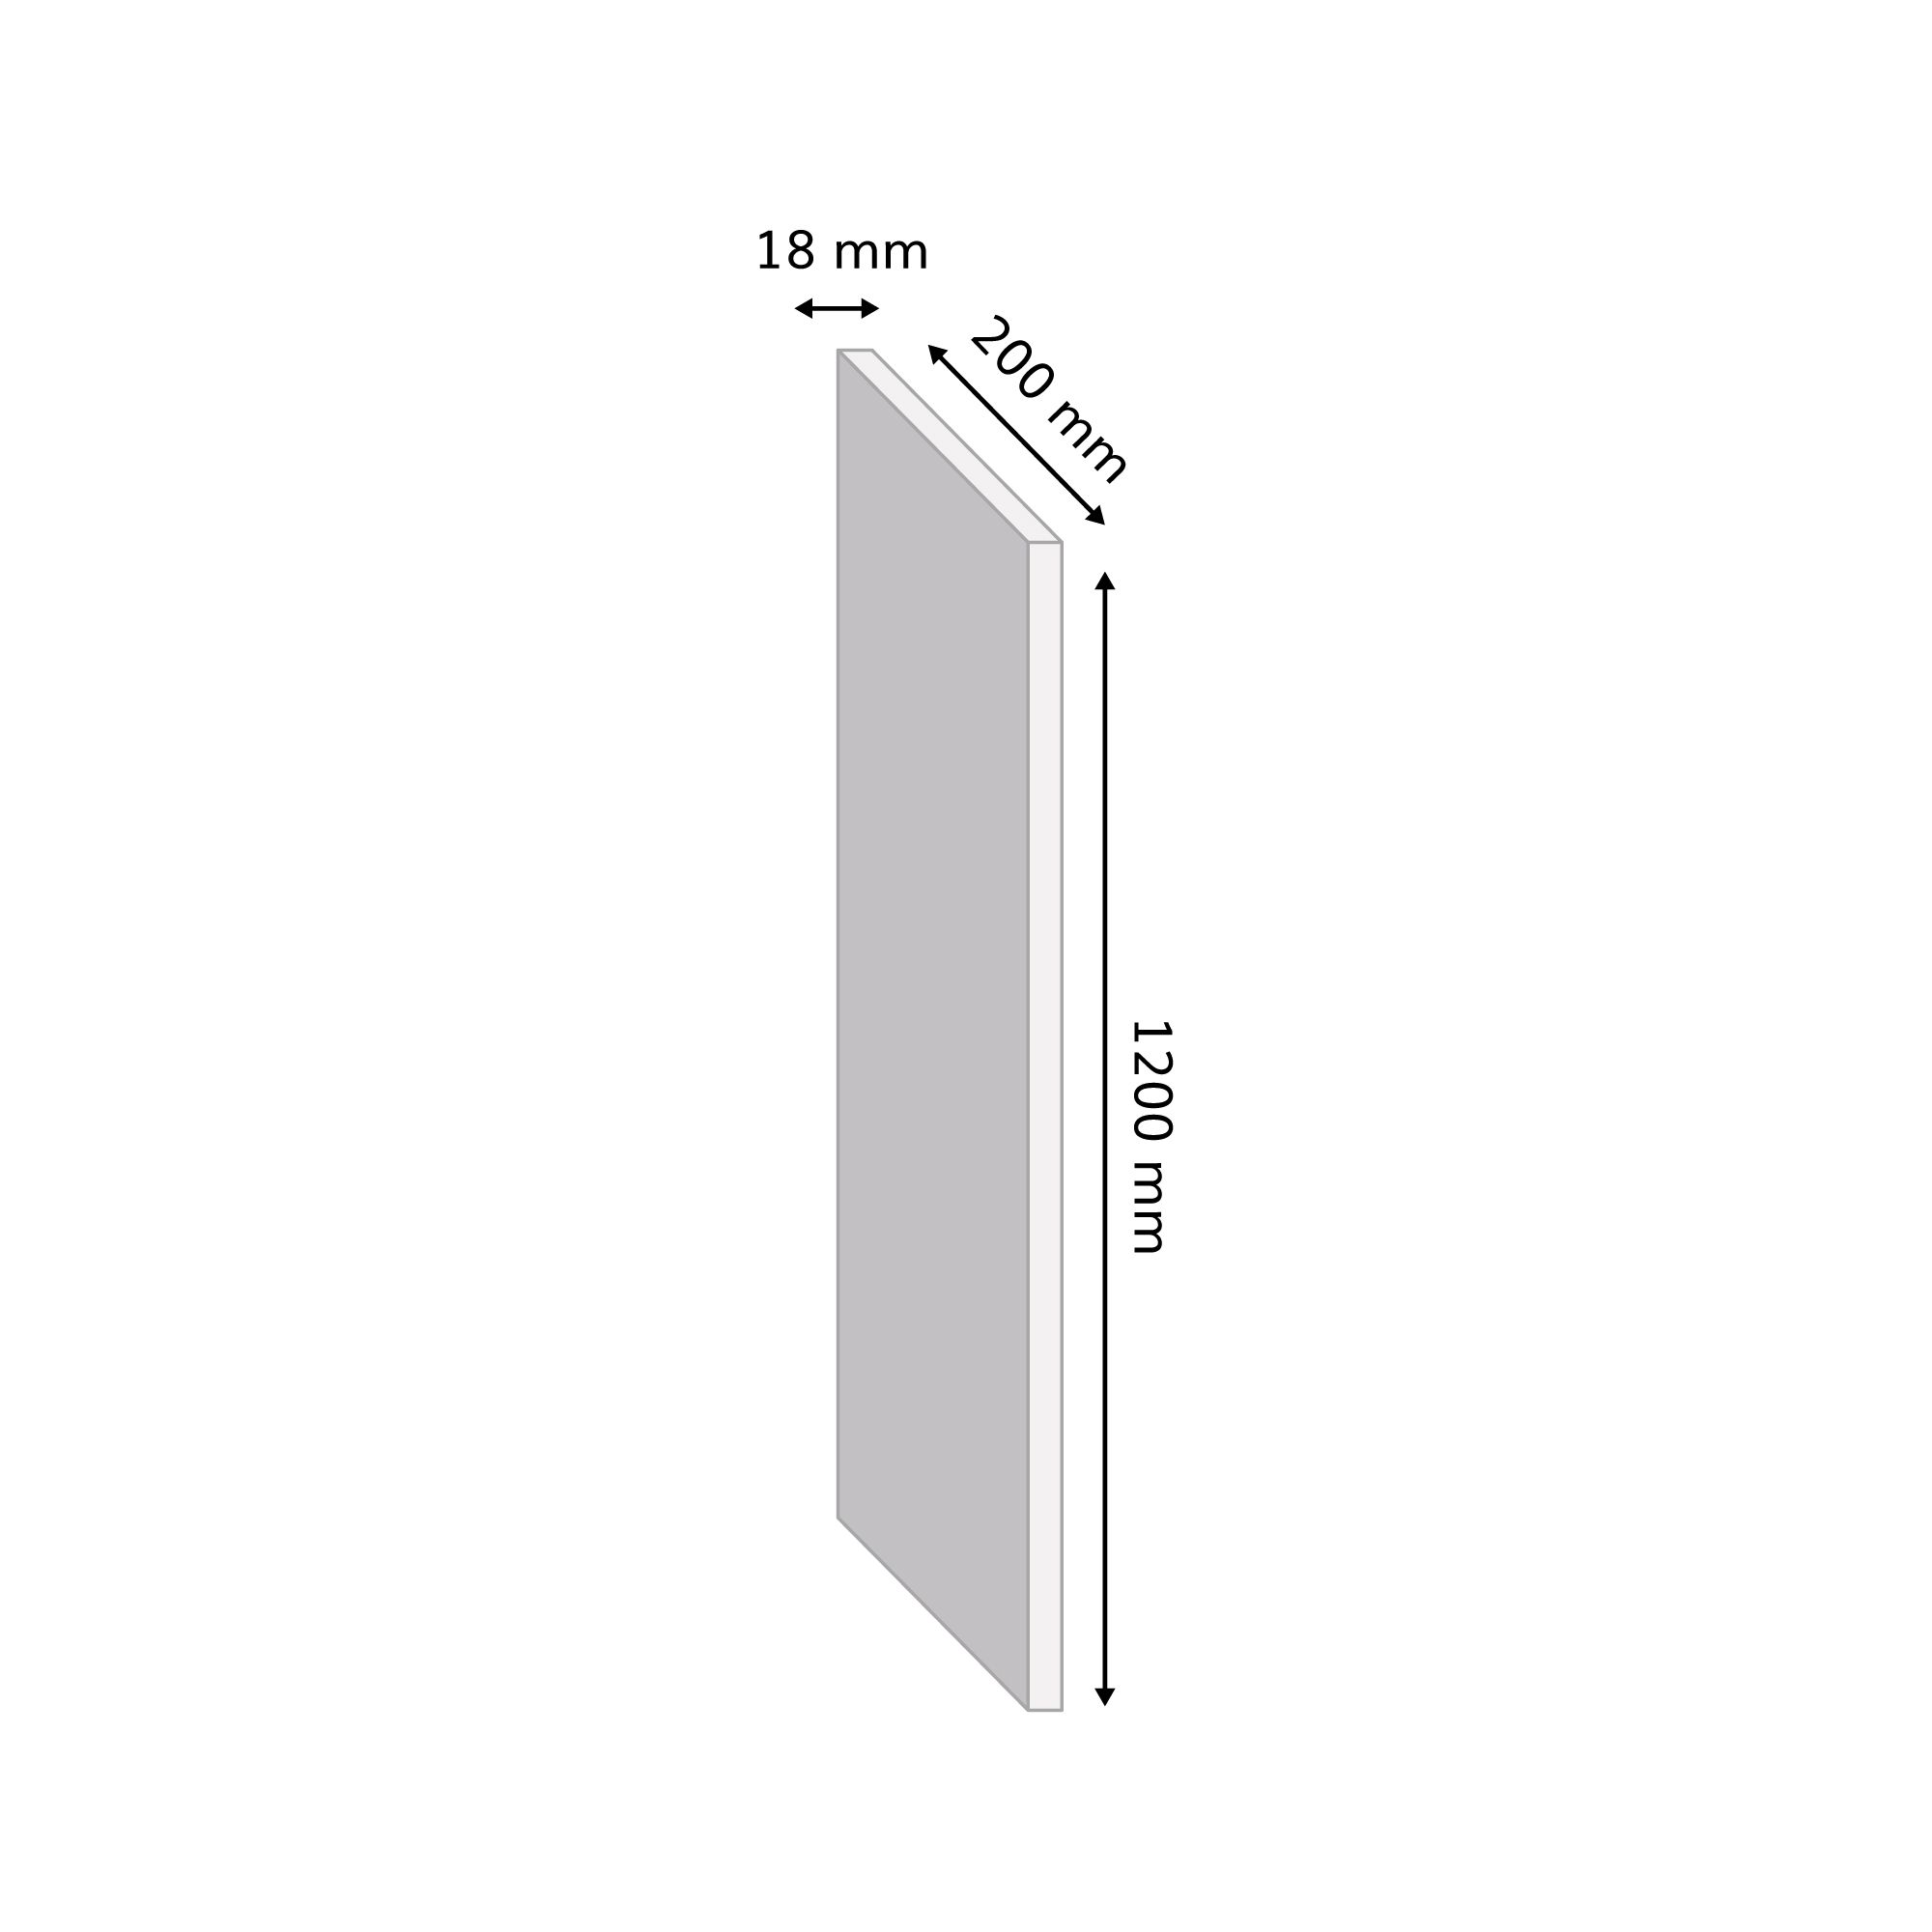 Grey Oak effect Square edge Furniture panel, (L)1.2m (W)200mm (T)18mm